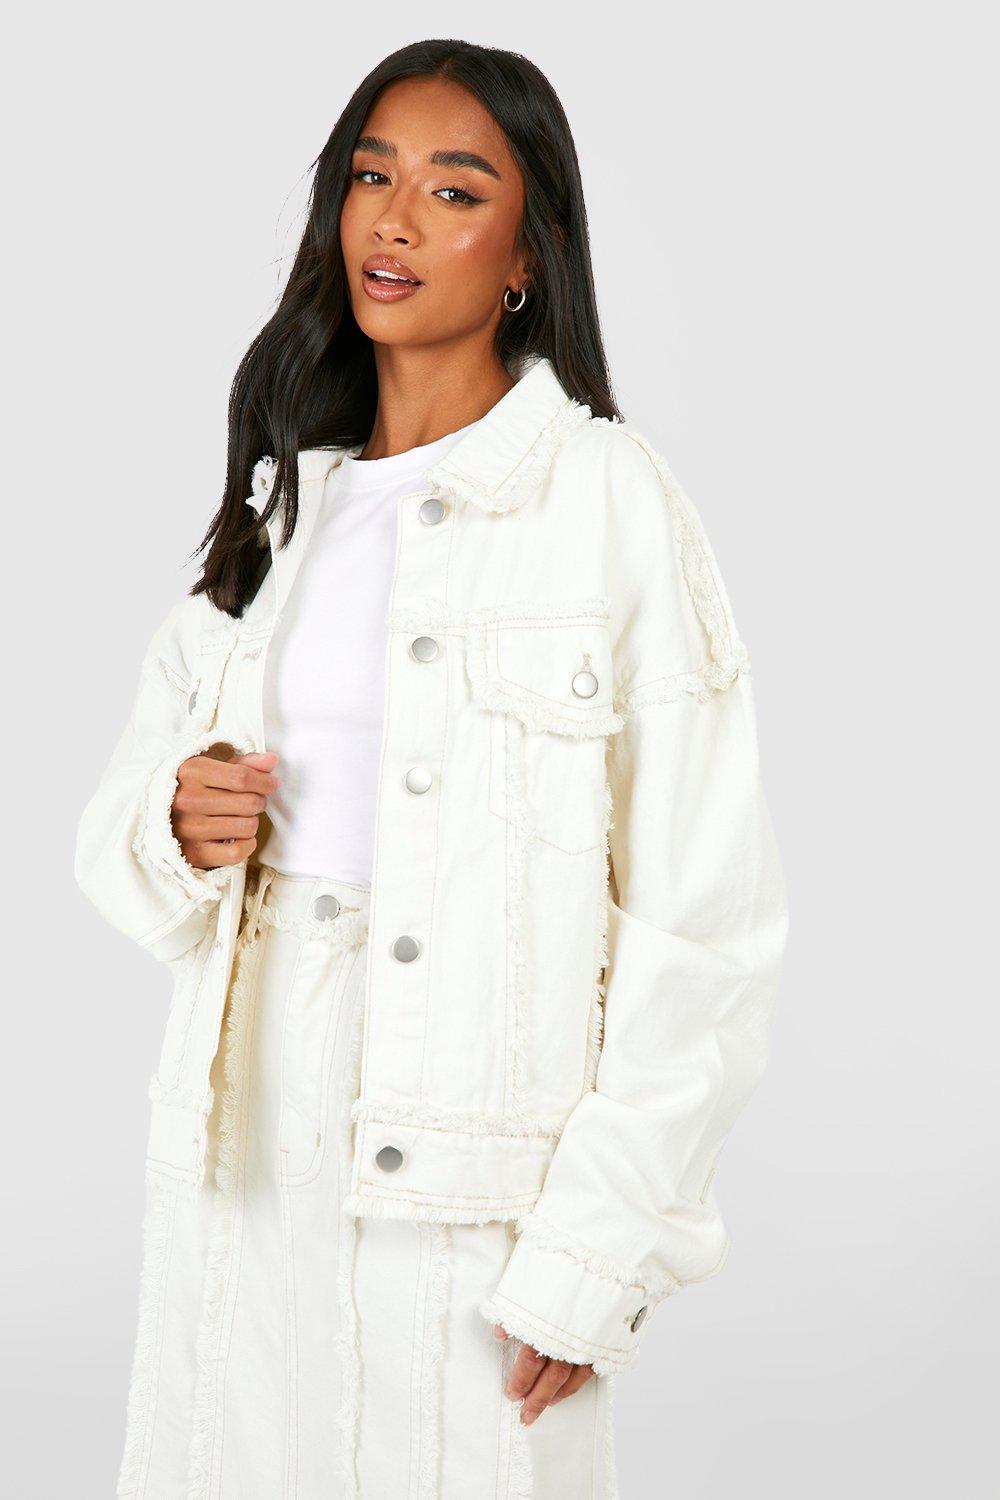 Full Sleeve Ladies White Denim Jacket at Rs 220/piece in New Delhi | ID:  22941452930